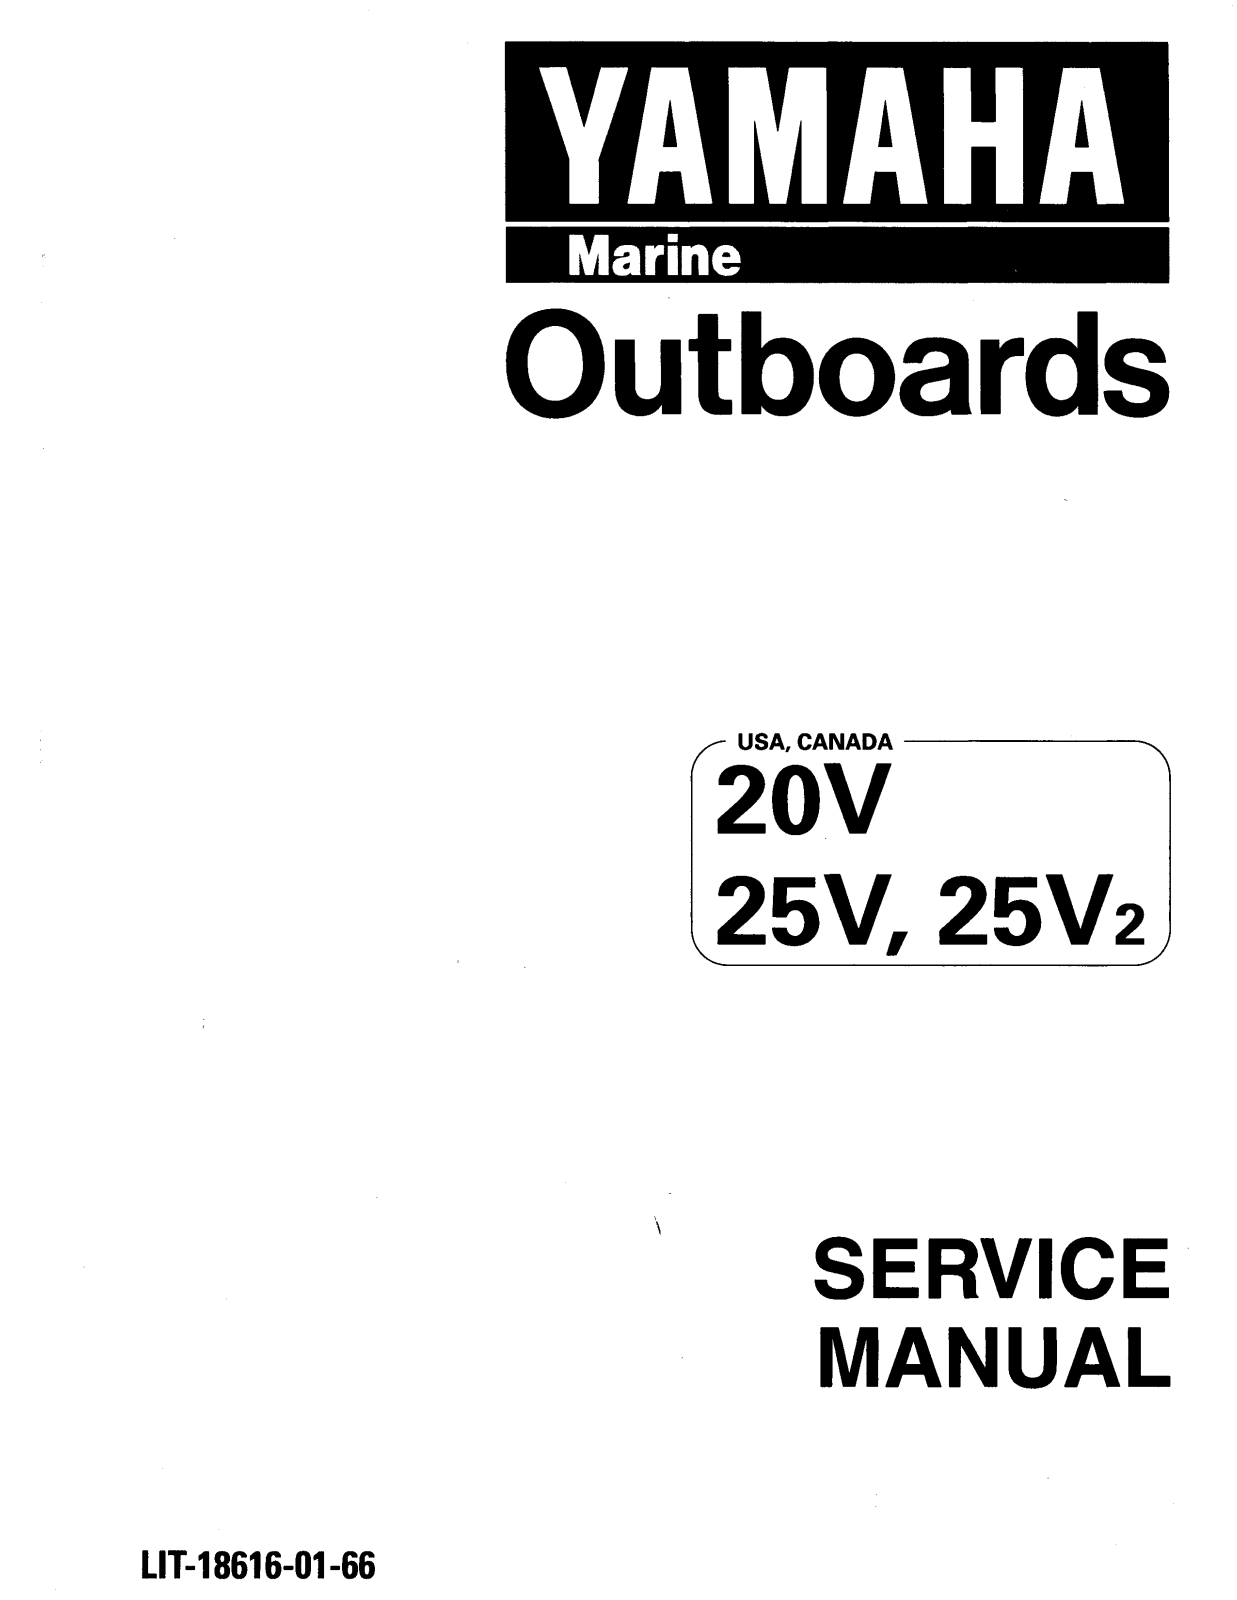 Yamaha 20V, 25V, 25V2 SERVICE MANUAL